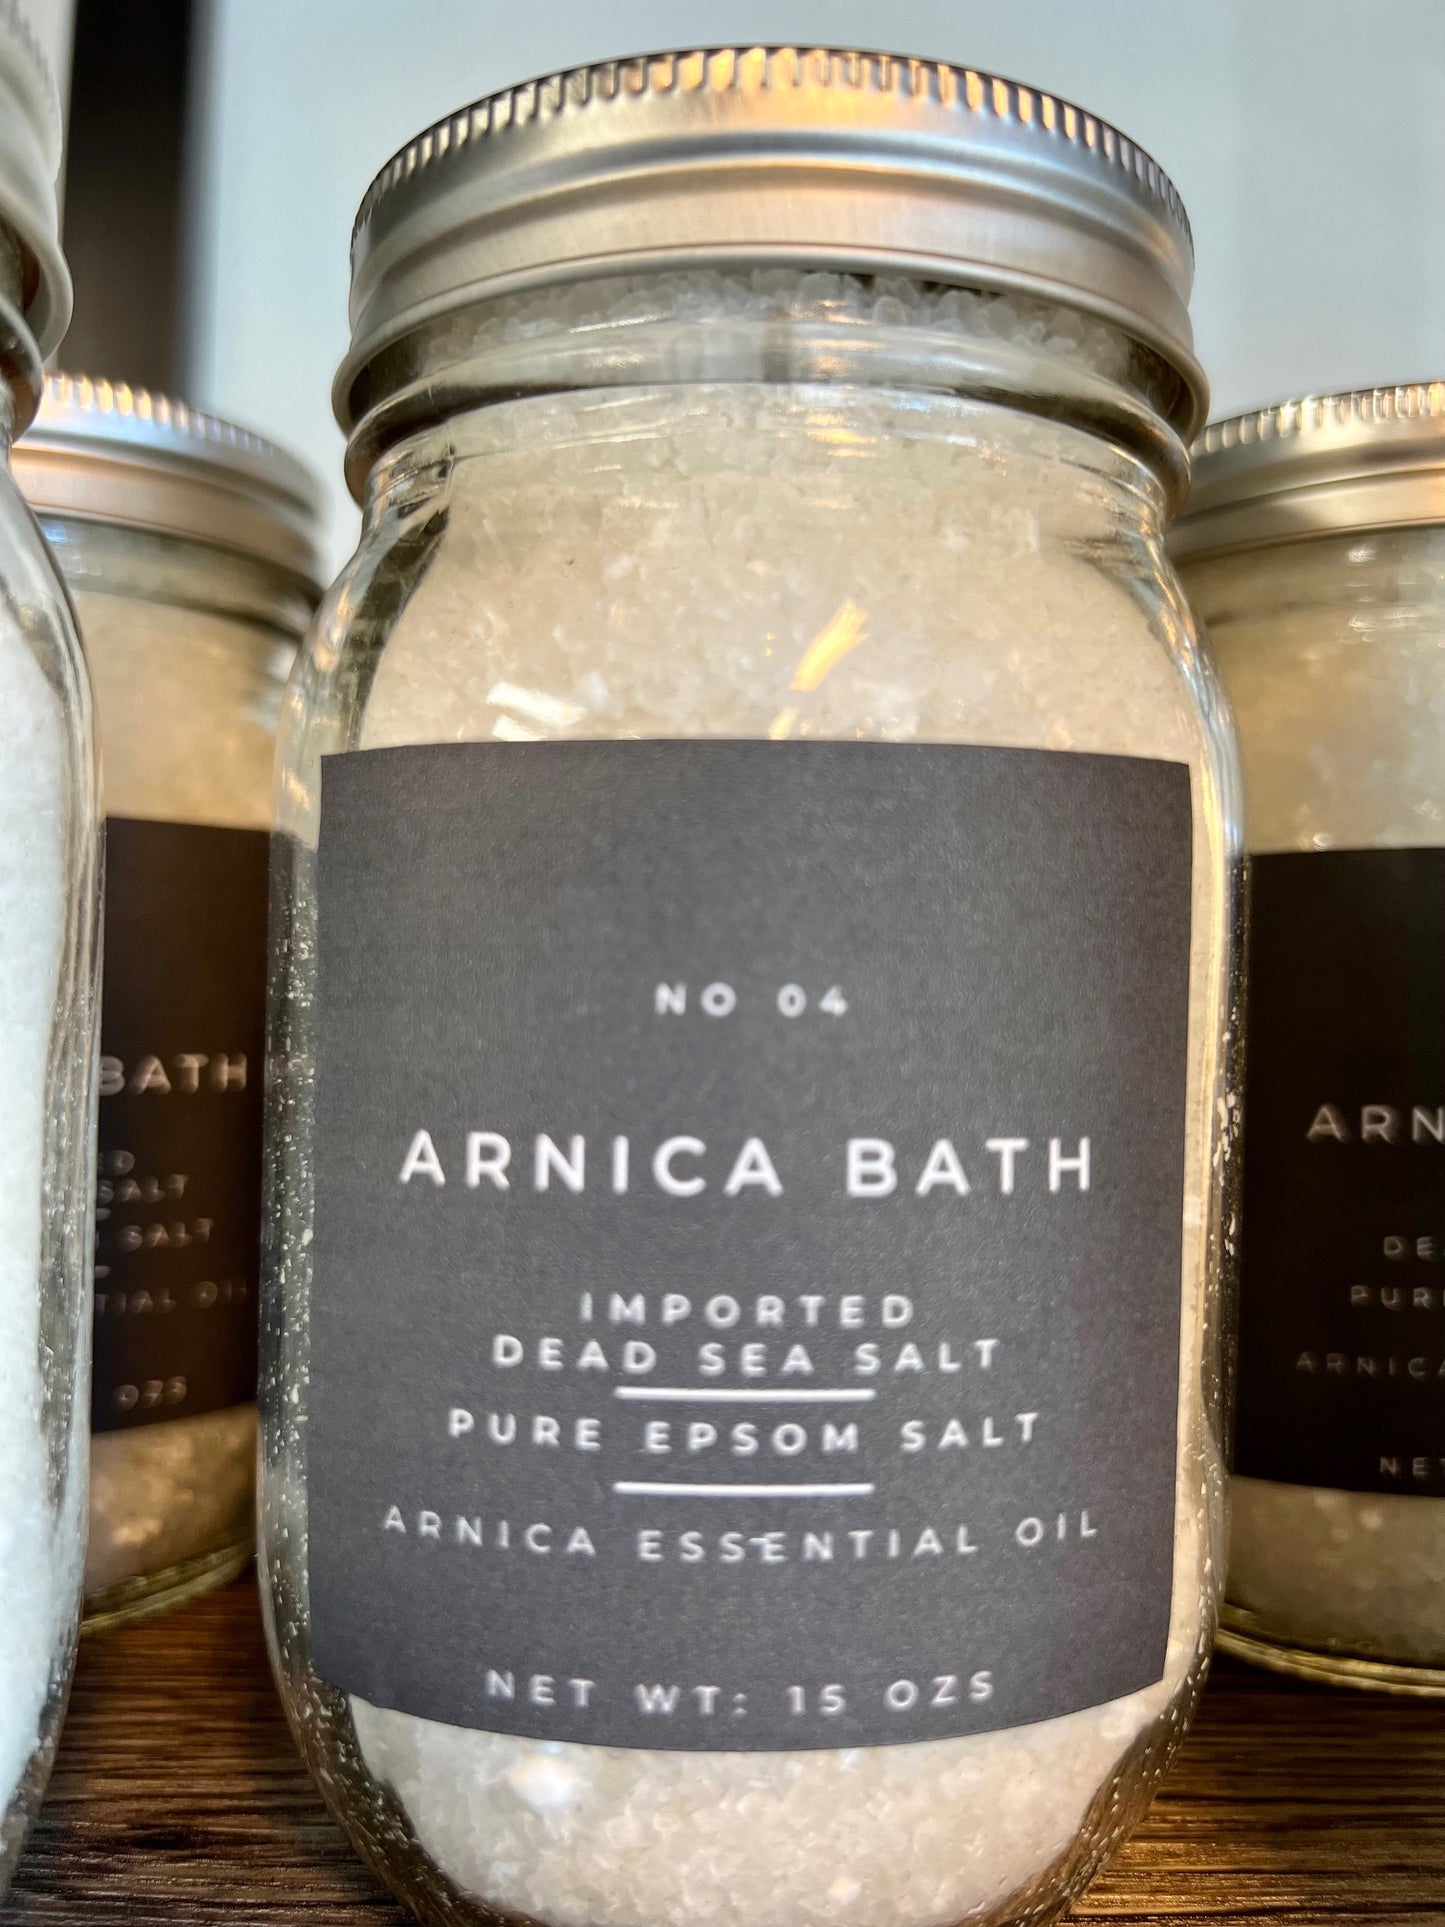 Arnica Bath Salts